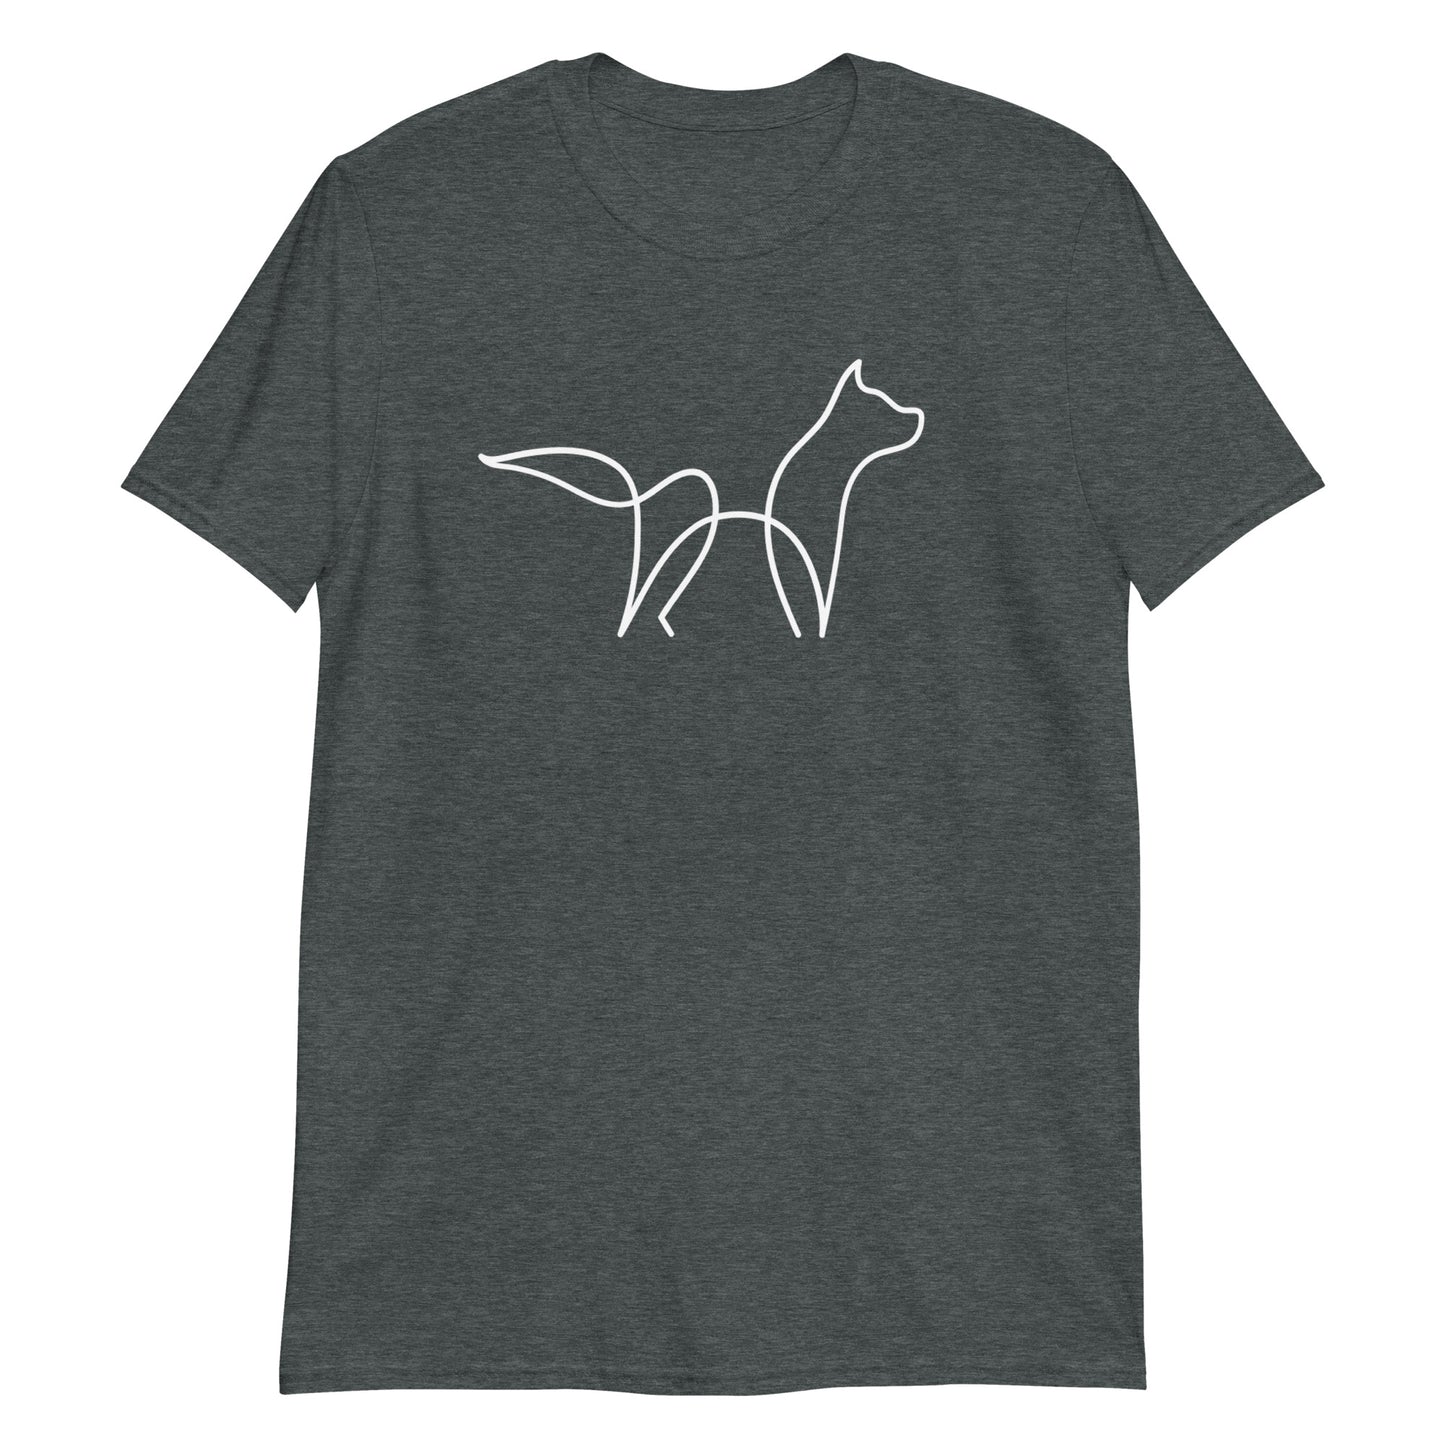 Bathbury Dirty Dog - Short-Sleeve Unisex T-Shirt